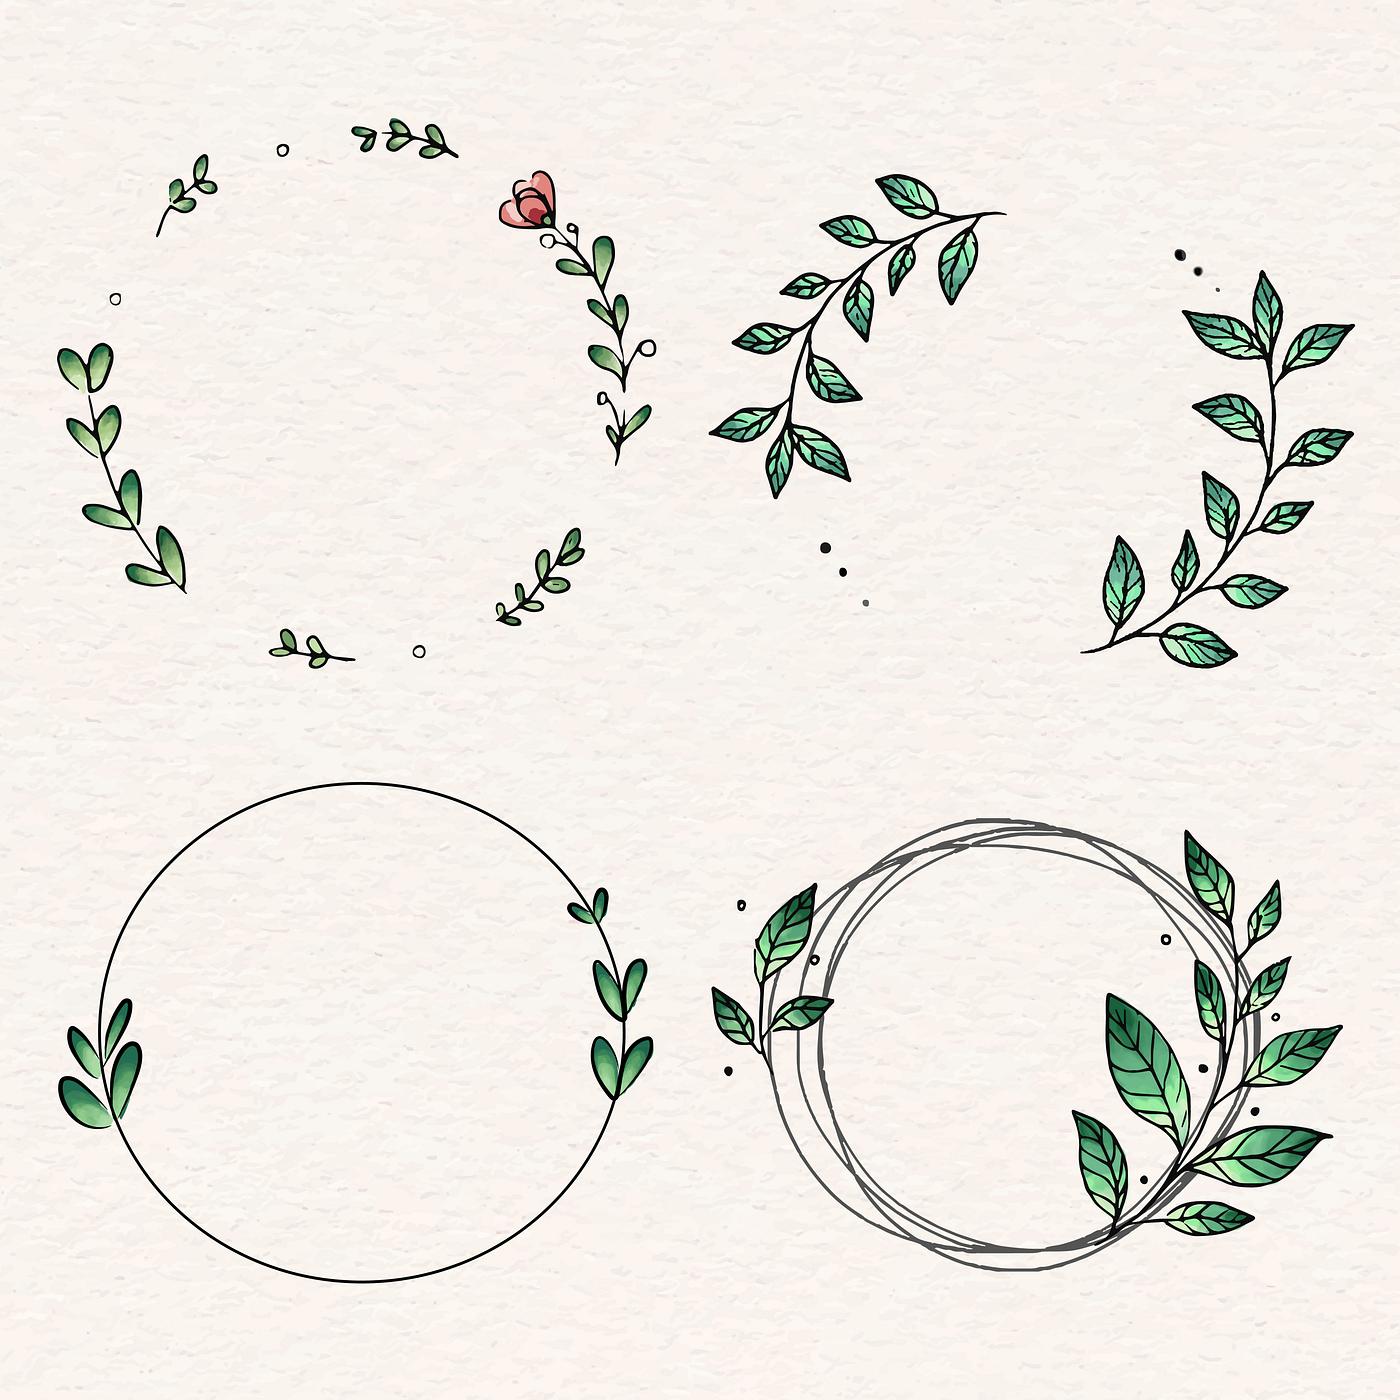 Download Laurel wreath design set | Royalty free stock vector - 843838